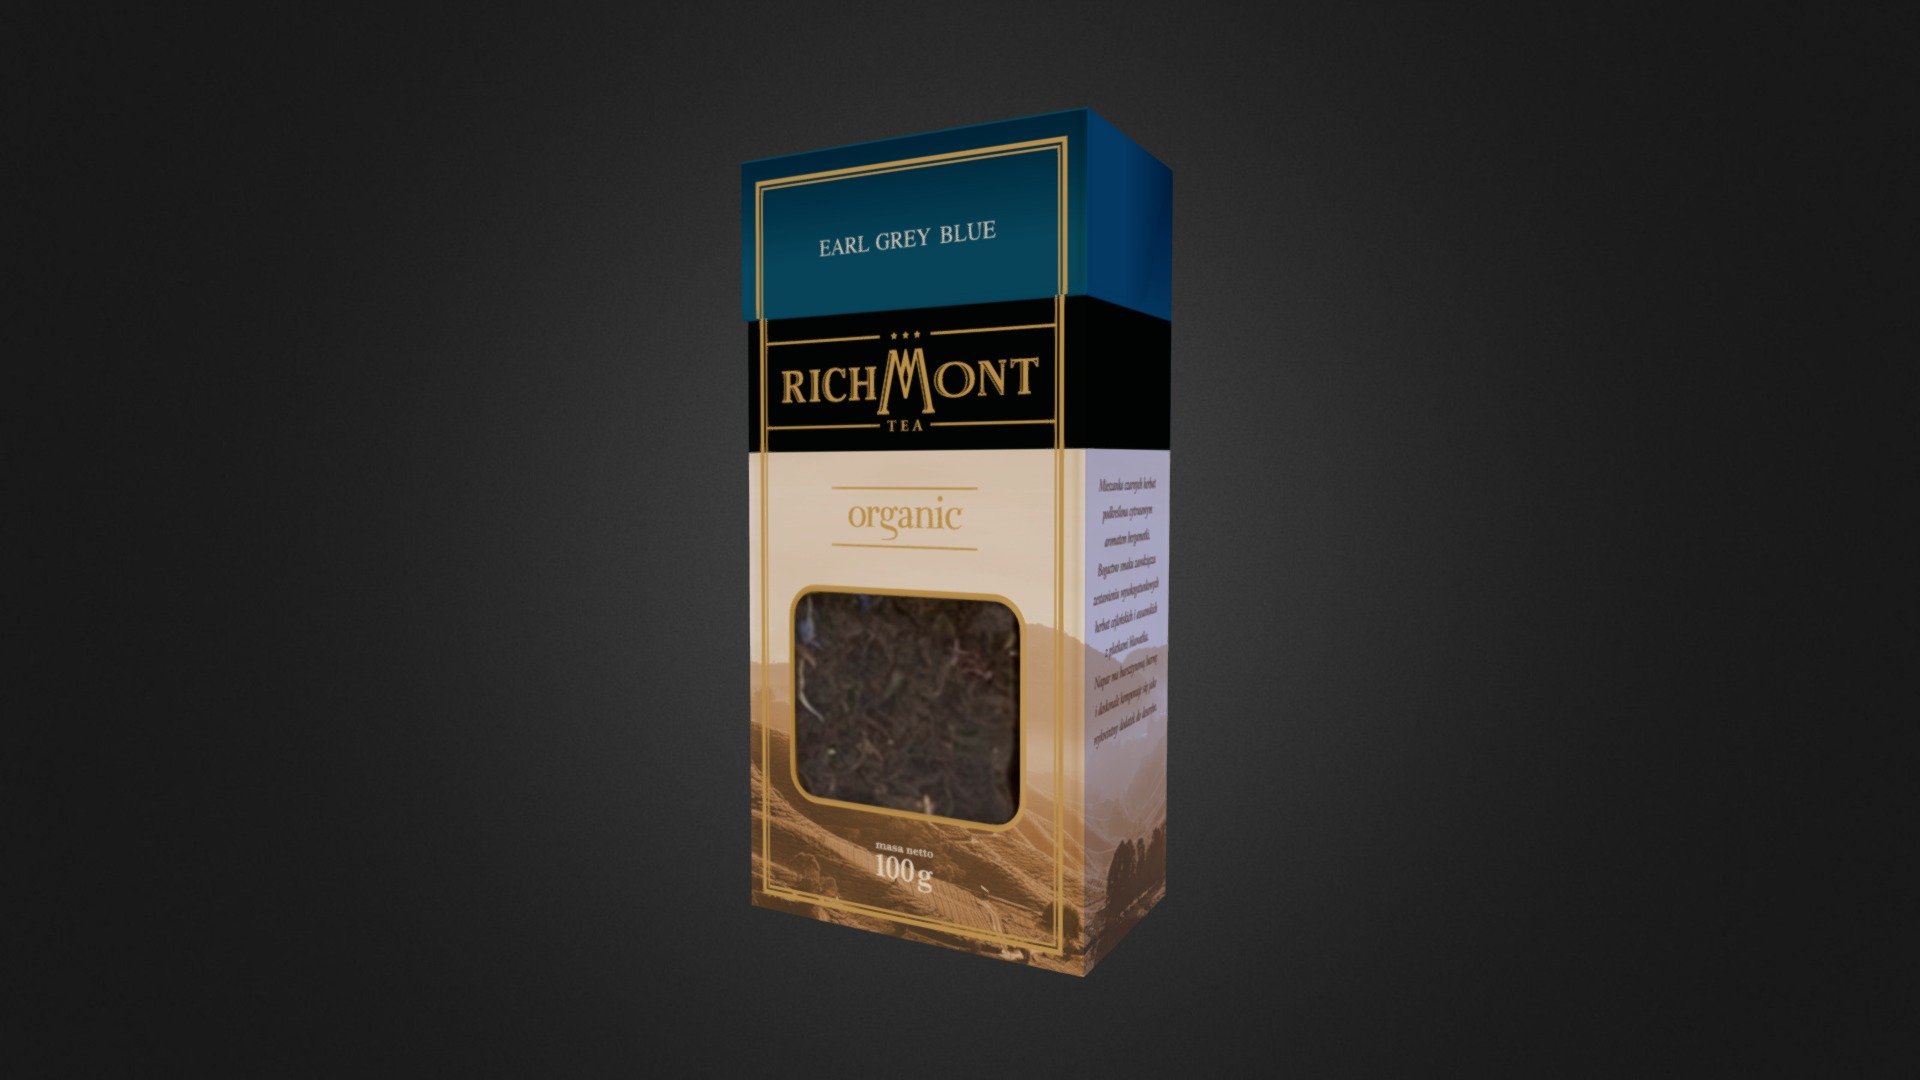 Earl Grey - Richmont tea